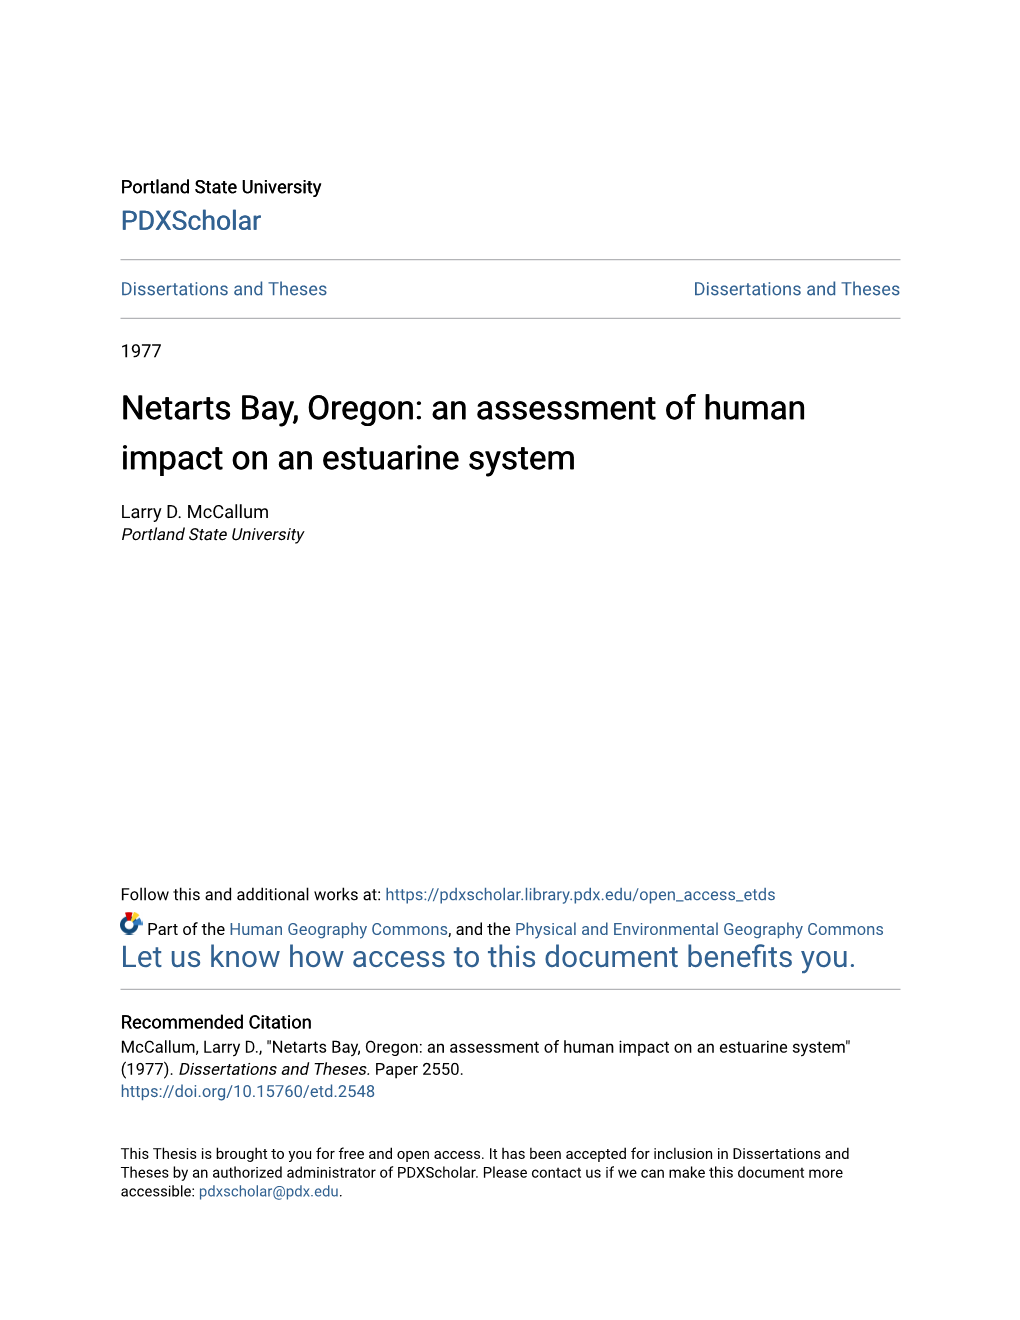 Netarts Bay, Oregon: an Assessment of Human Impact on an Estuarine System